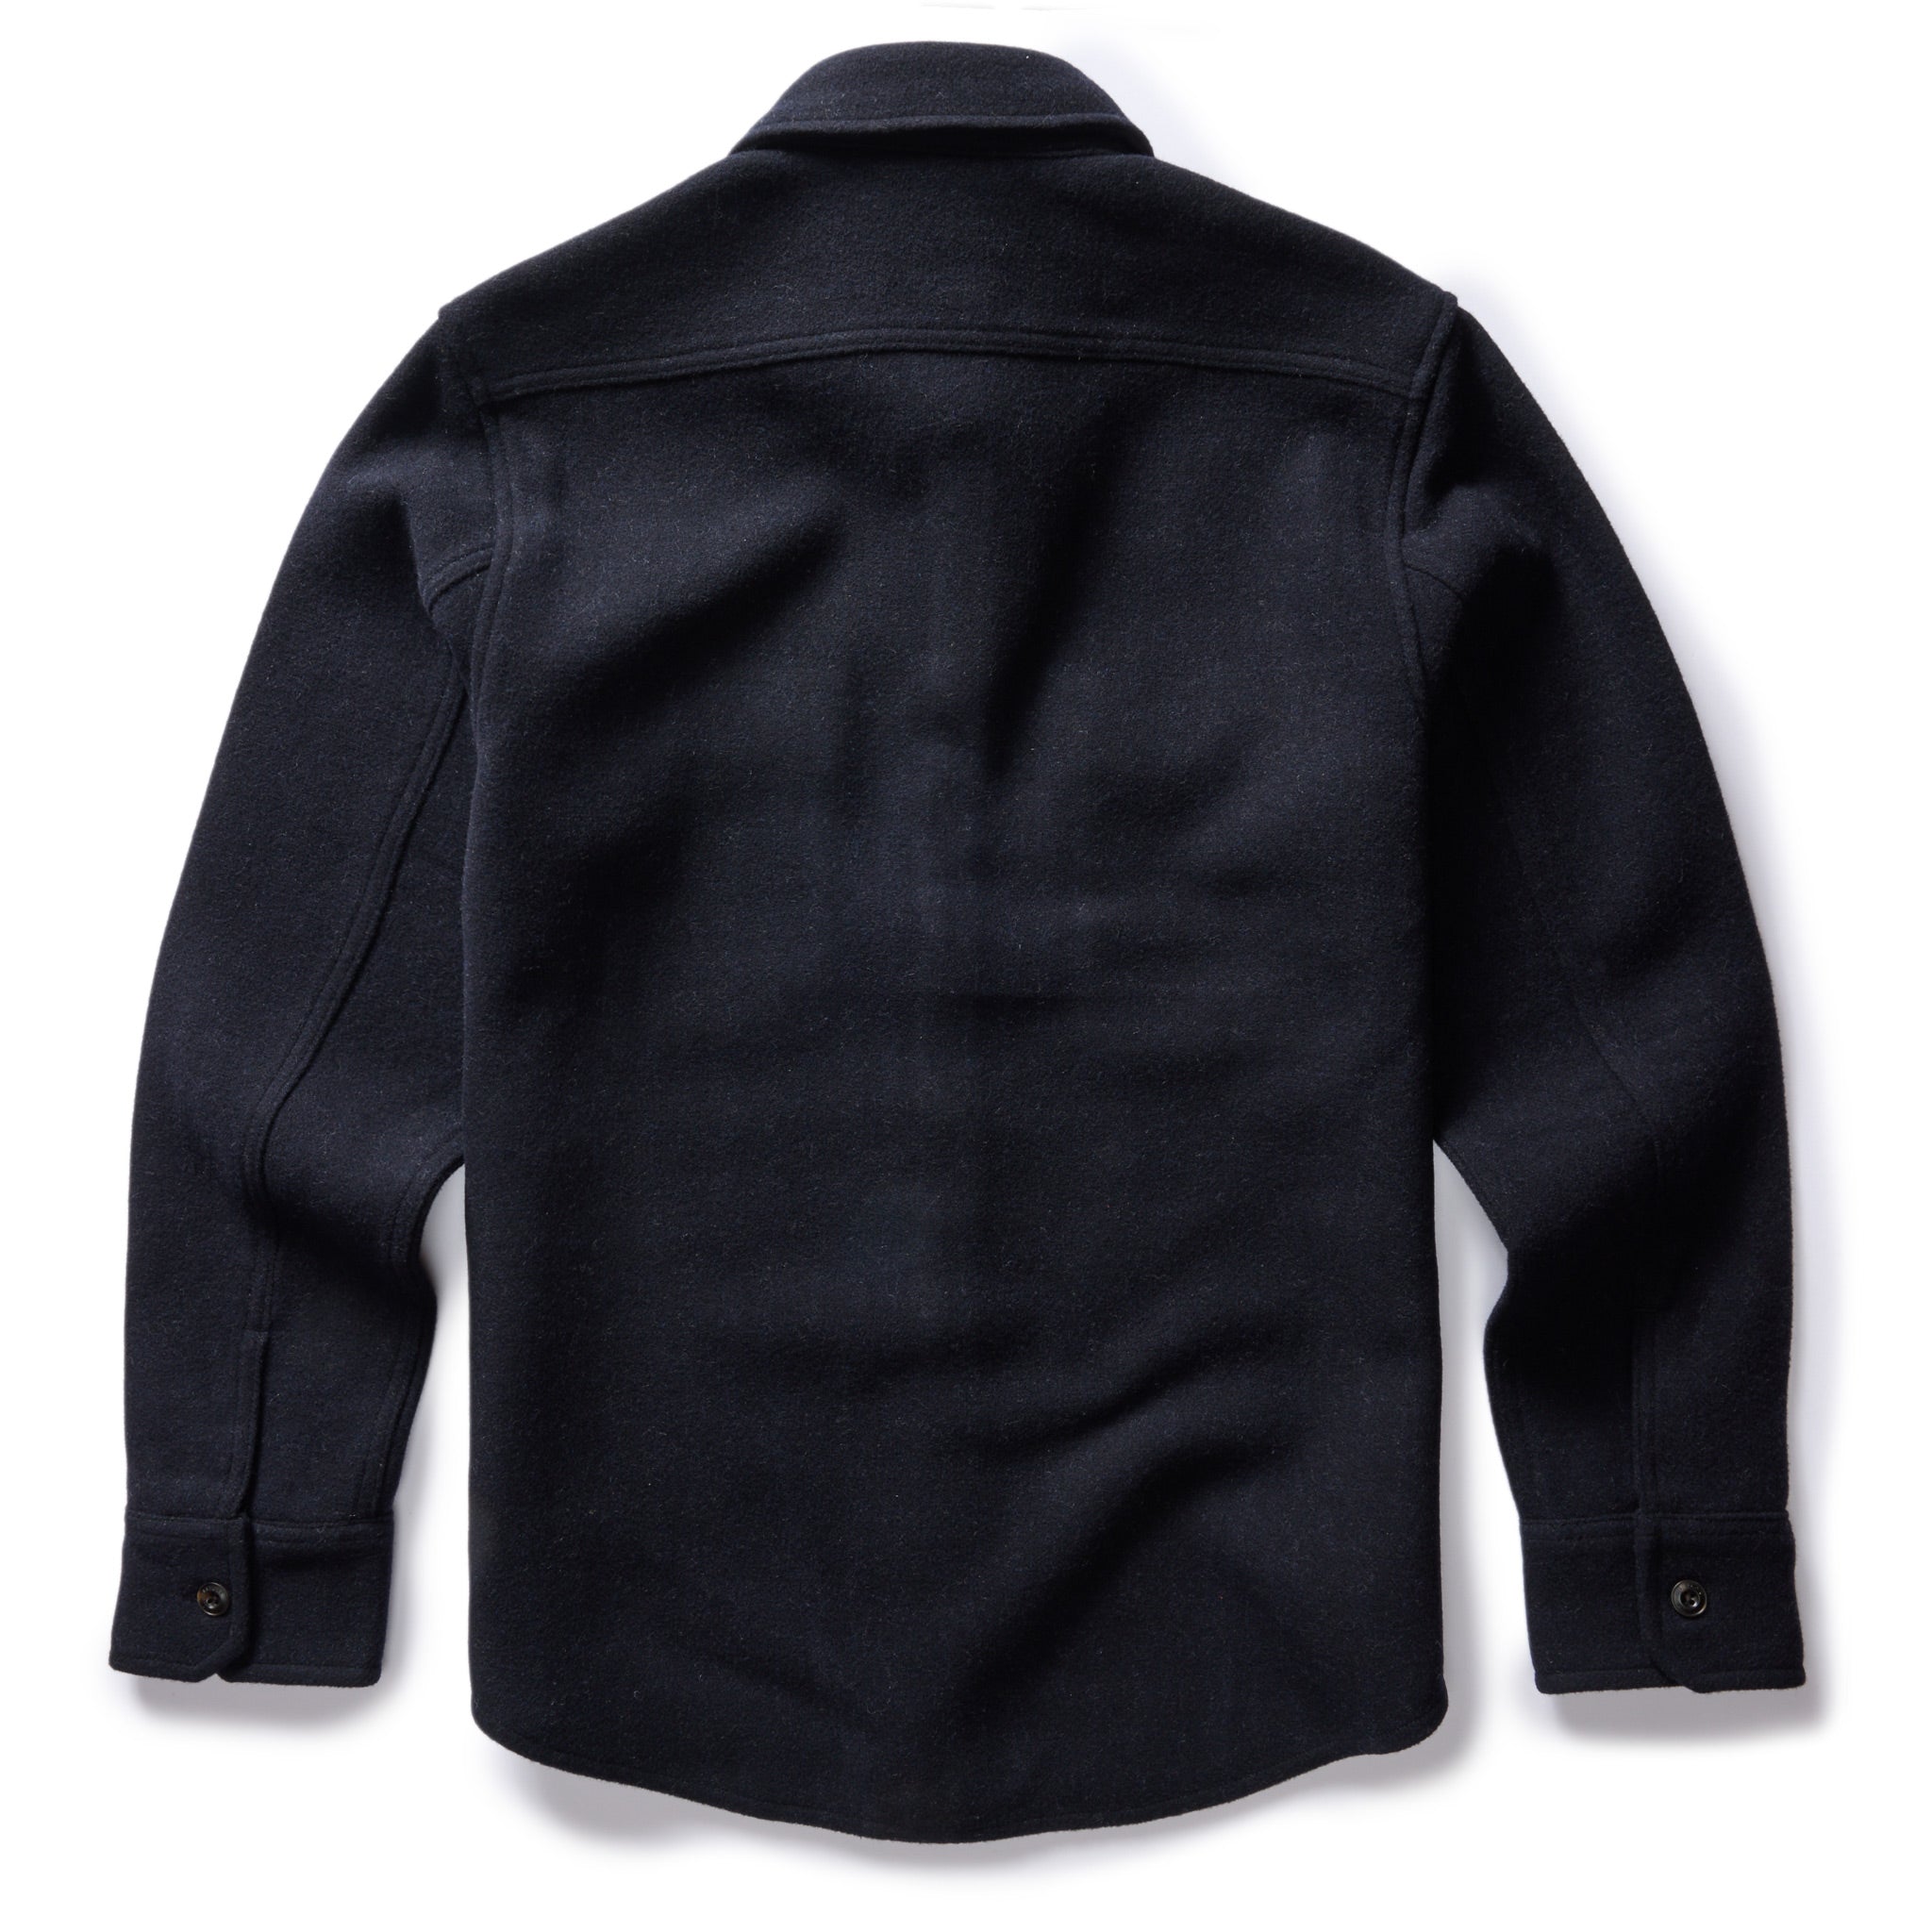 The Maritime Shirt Jacket in Dark Navy Wool